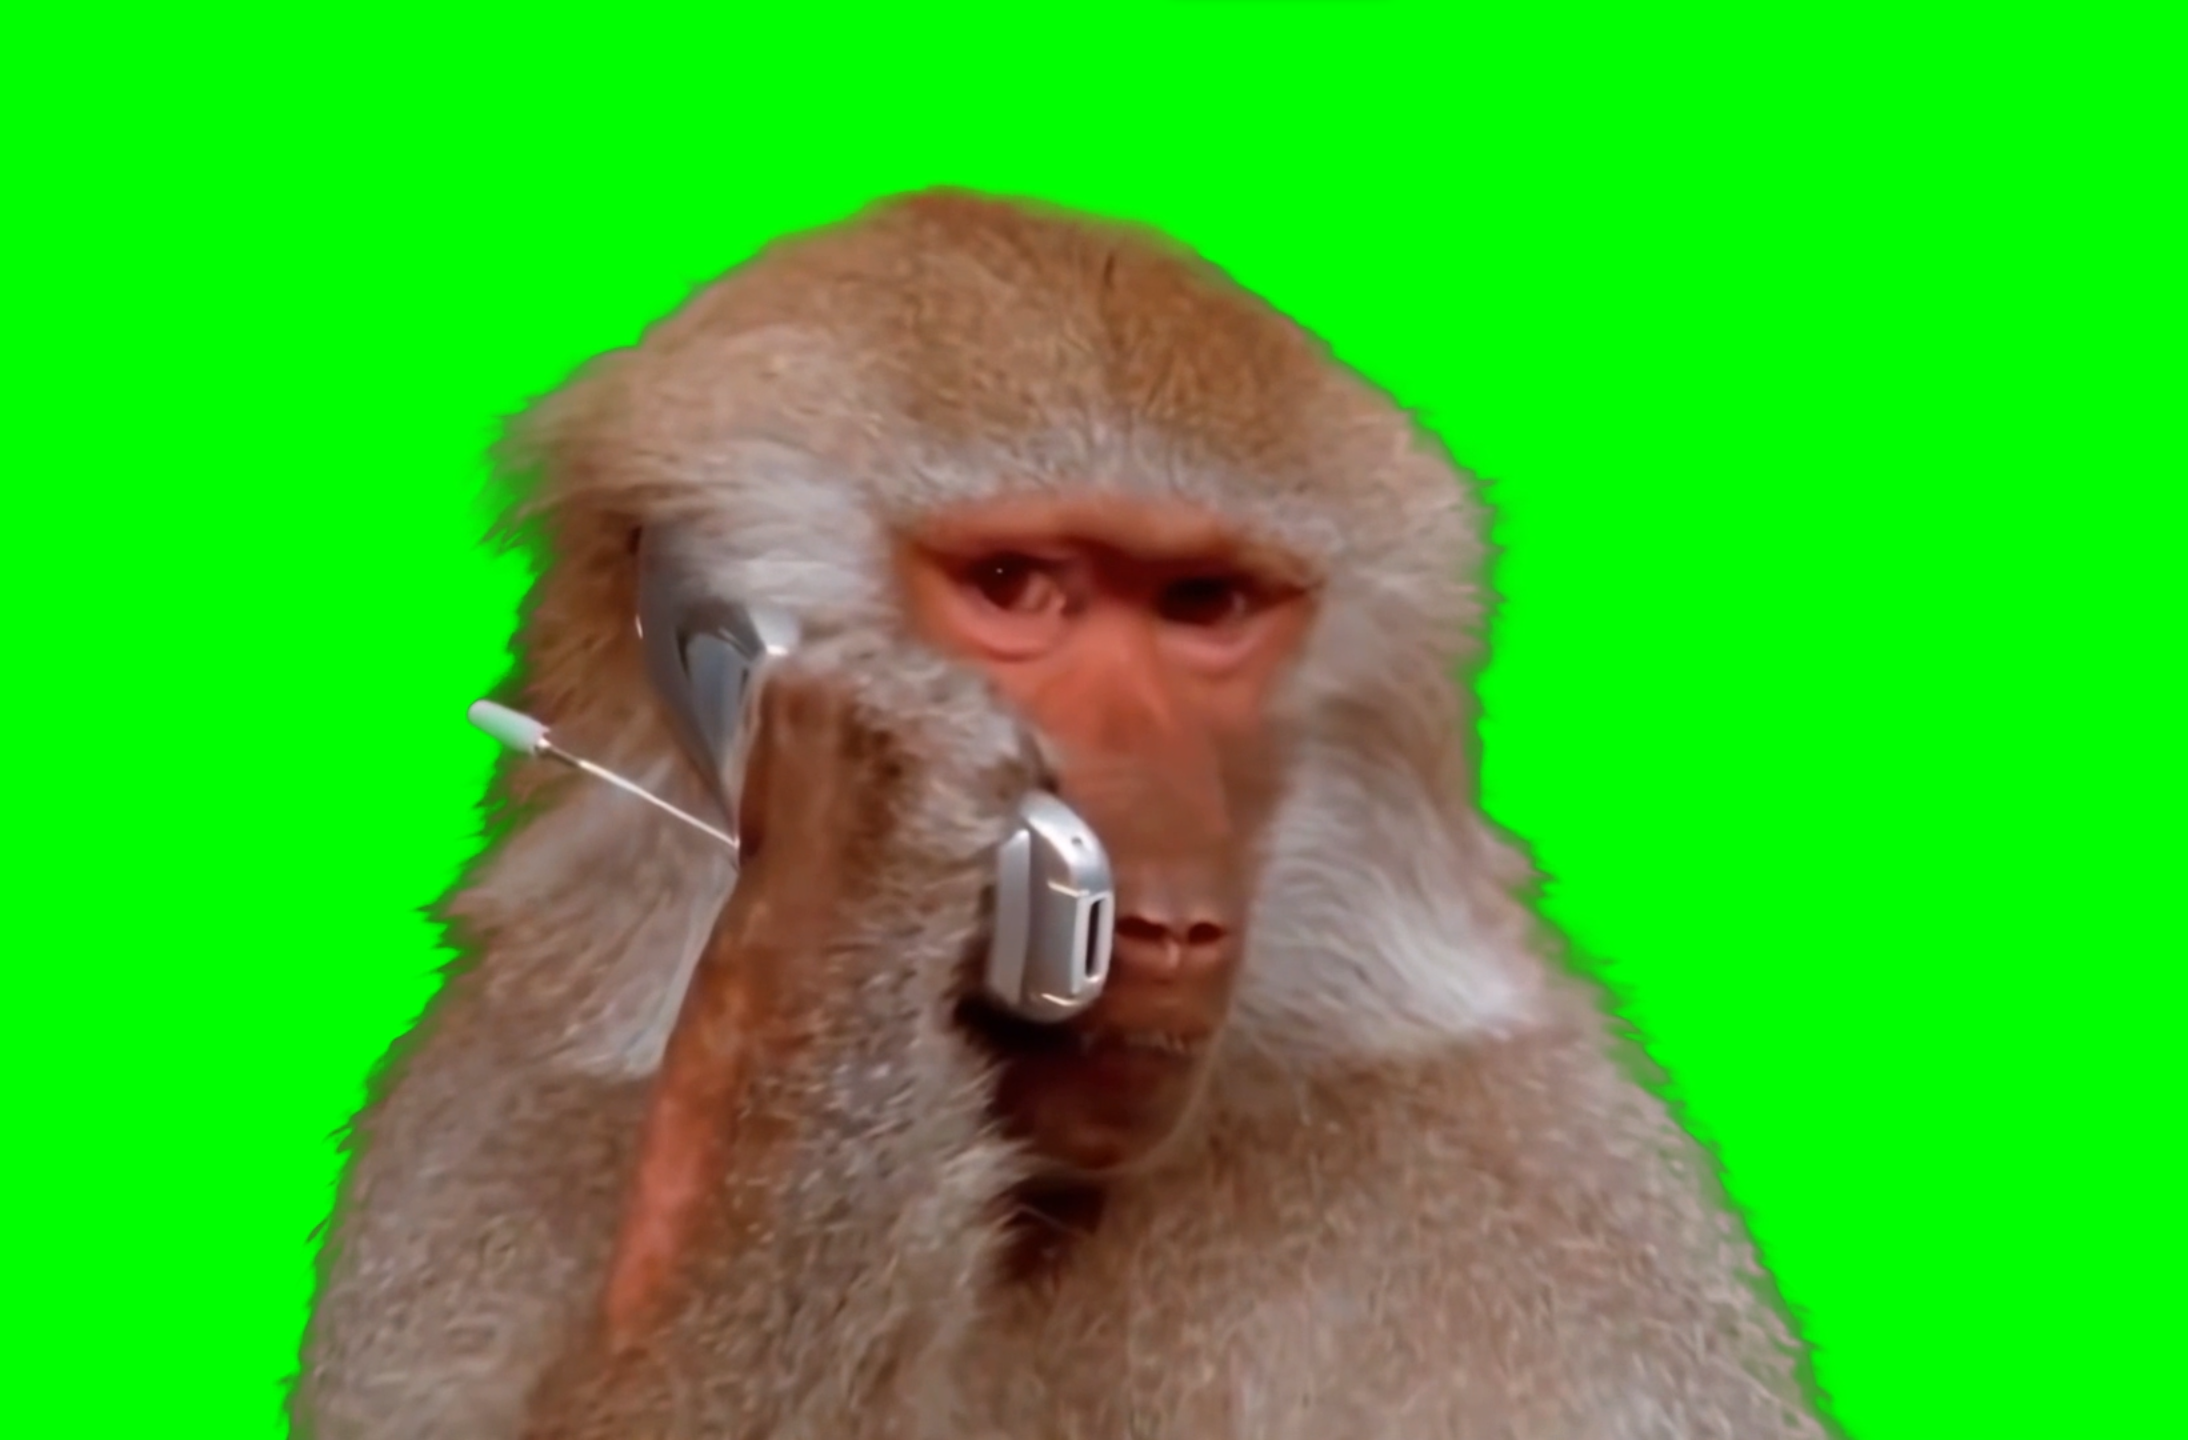 Monkey calling using phone meme (Green Screen)